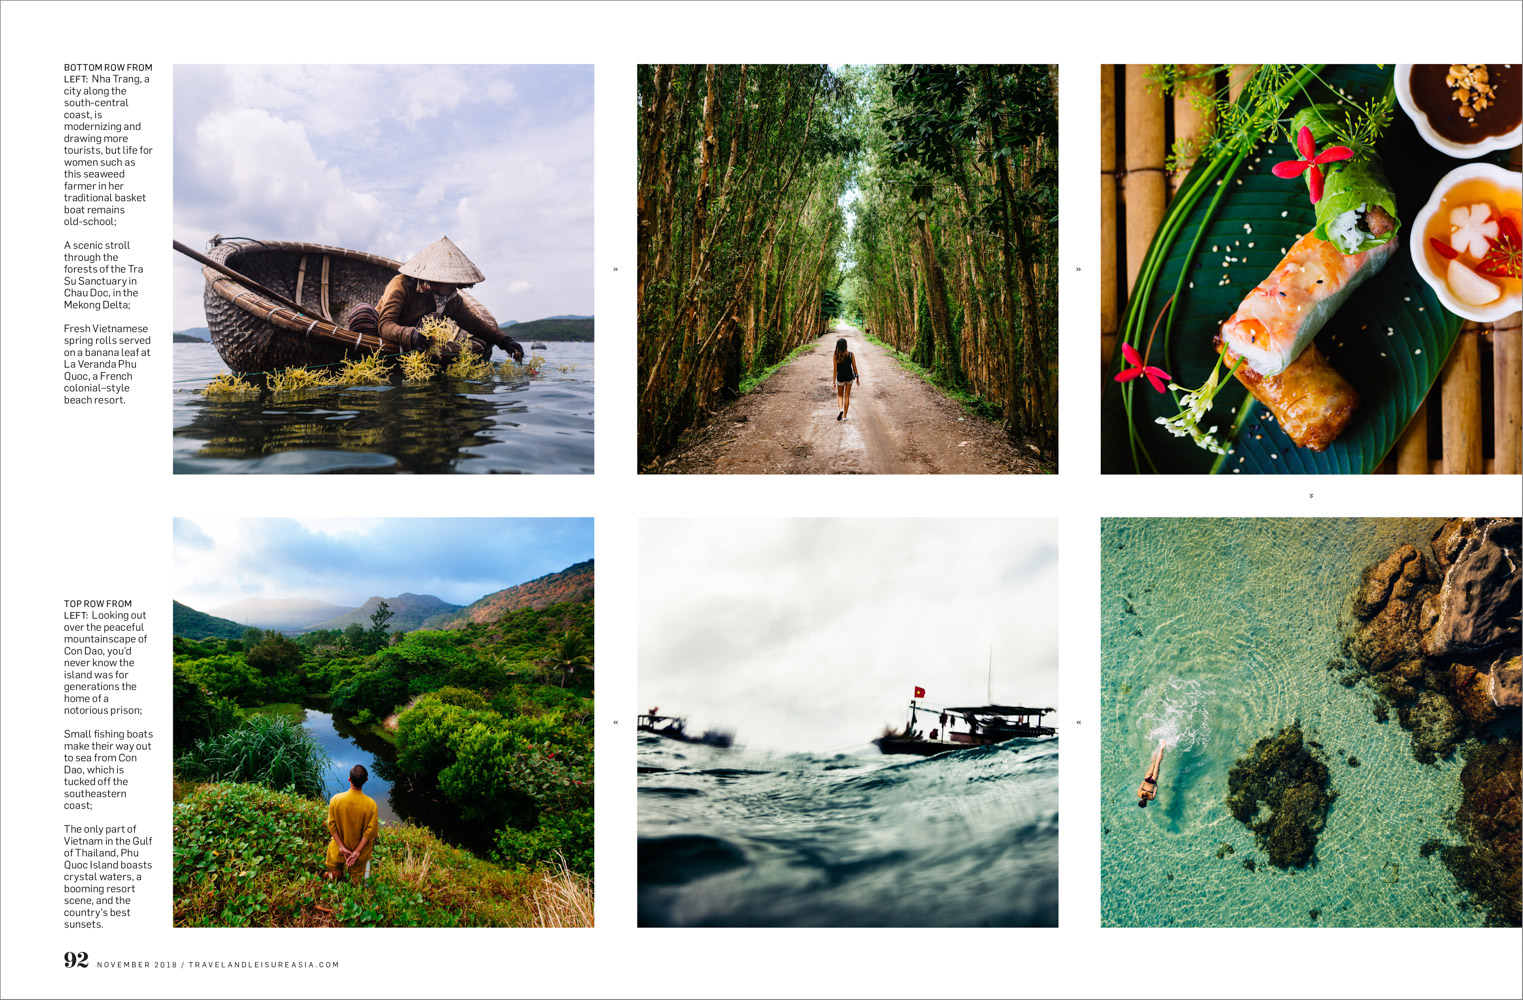 A photo essay across Vietnam for Travel + Leisure Southeast Asia magazine.